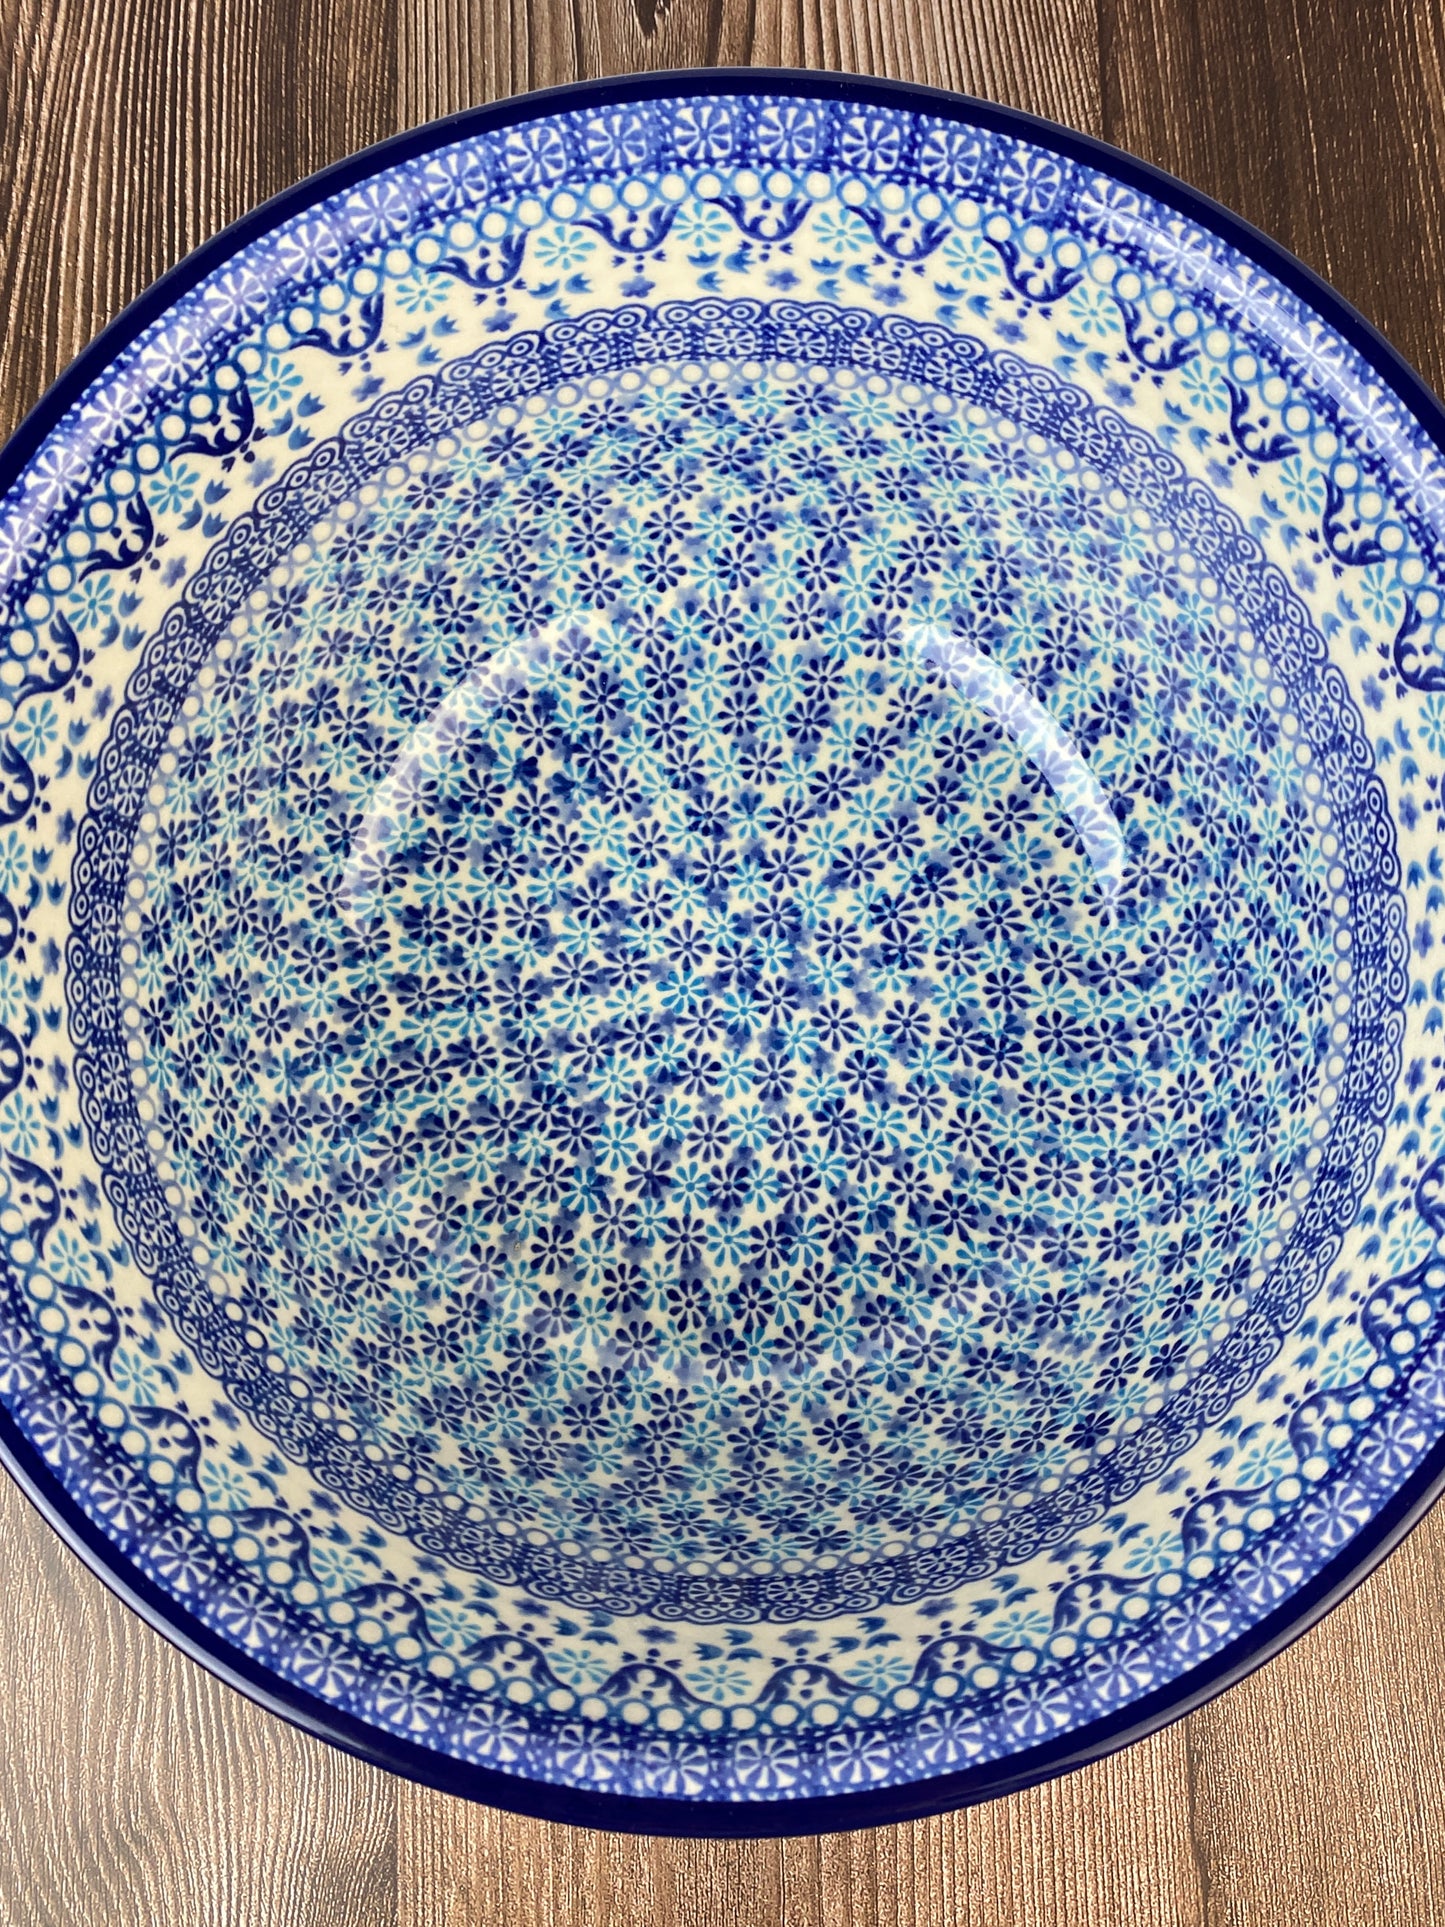 Large Mixing Bowl - Shape 113 - Pattern 2185